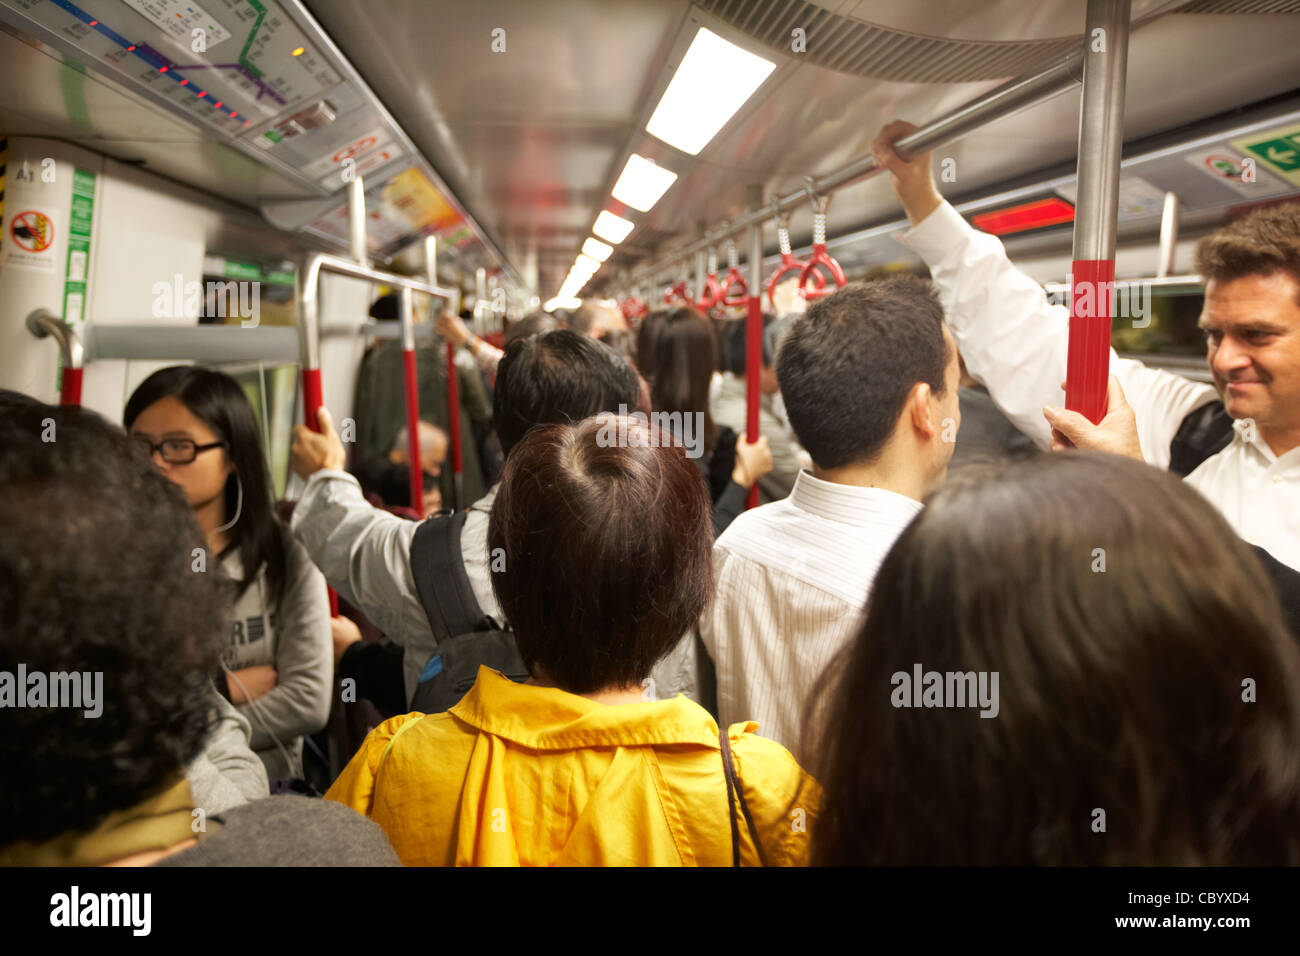 im vollen Zug Beförderung auf Hong Kong Mtr Public transport System Sonderverwaltungsregion Hongkong China Asien Stockfoto